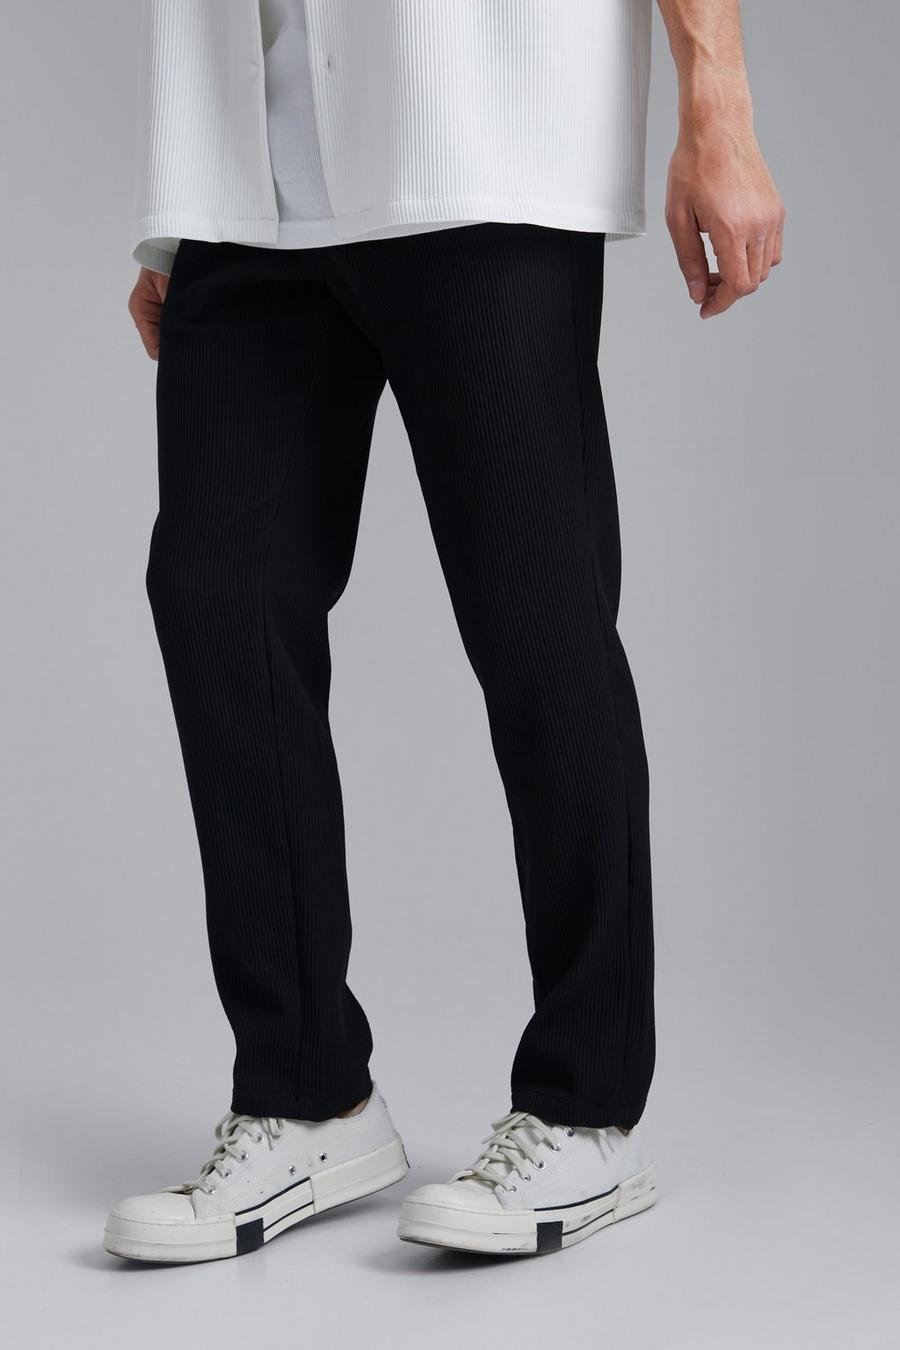 Pantalon court plissé, Black